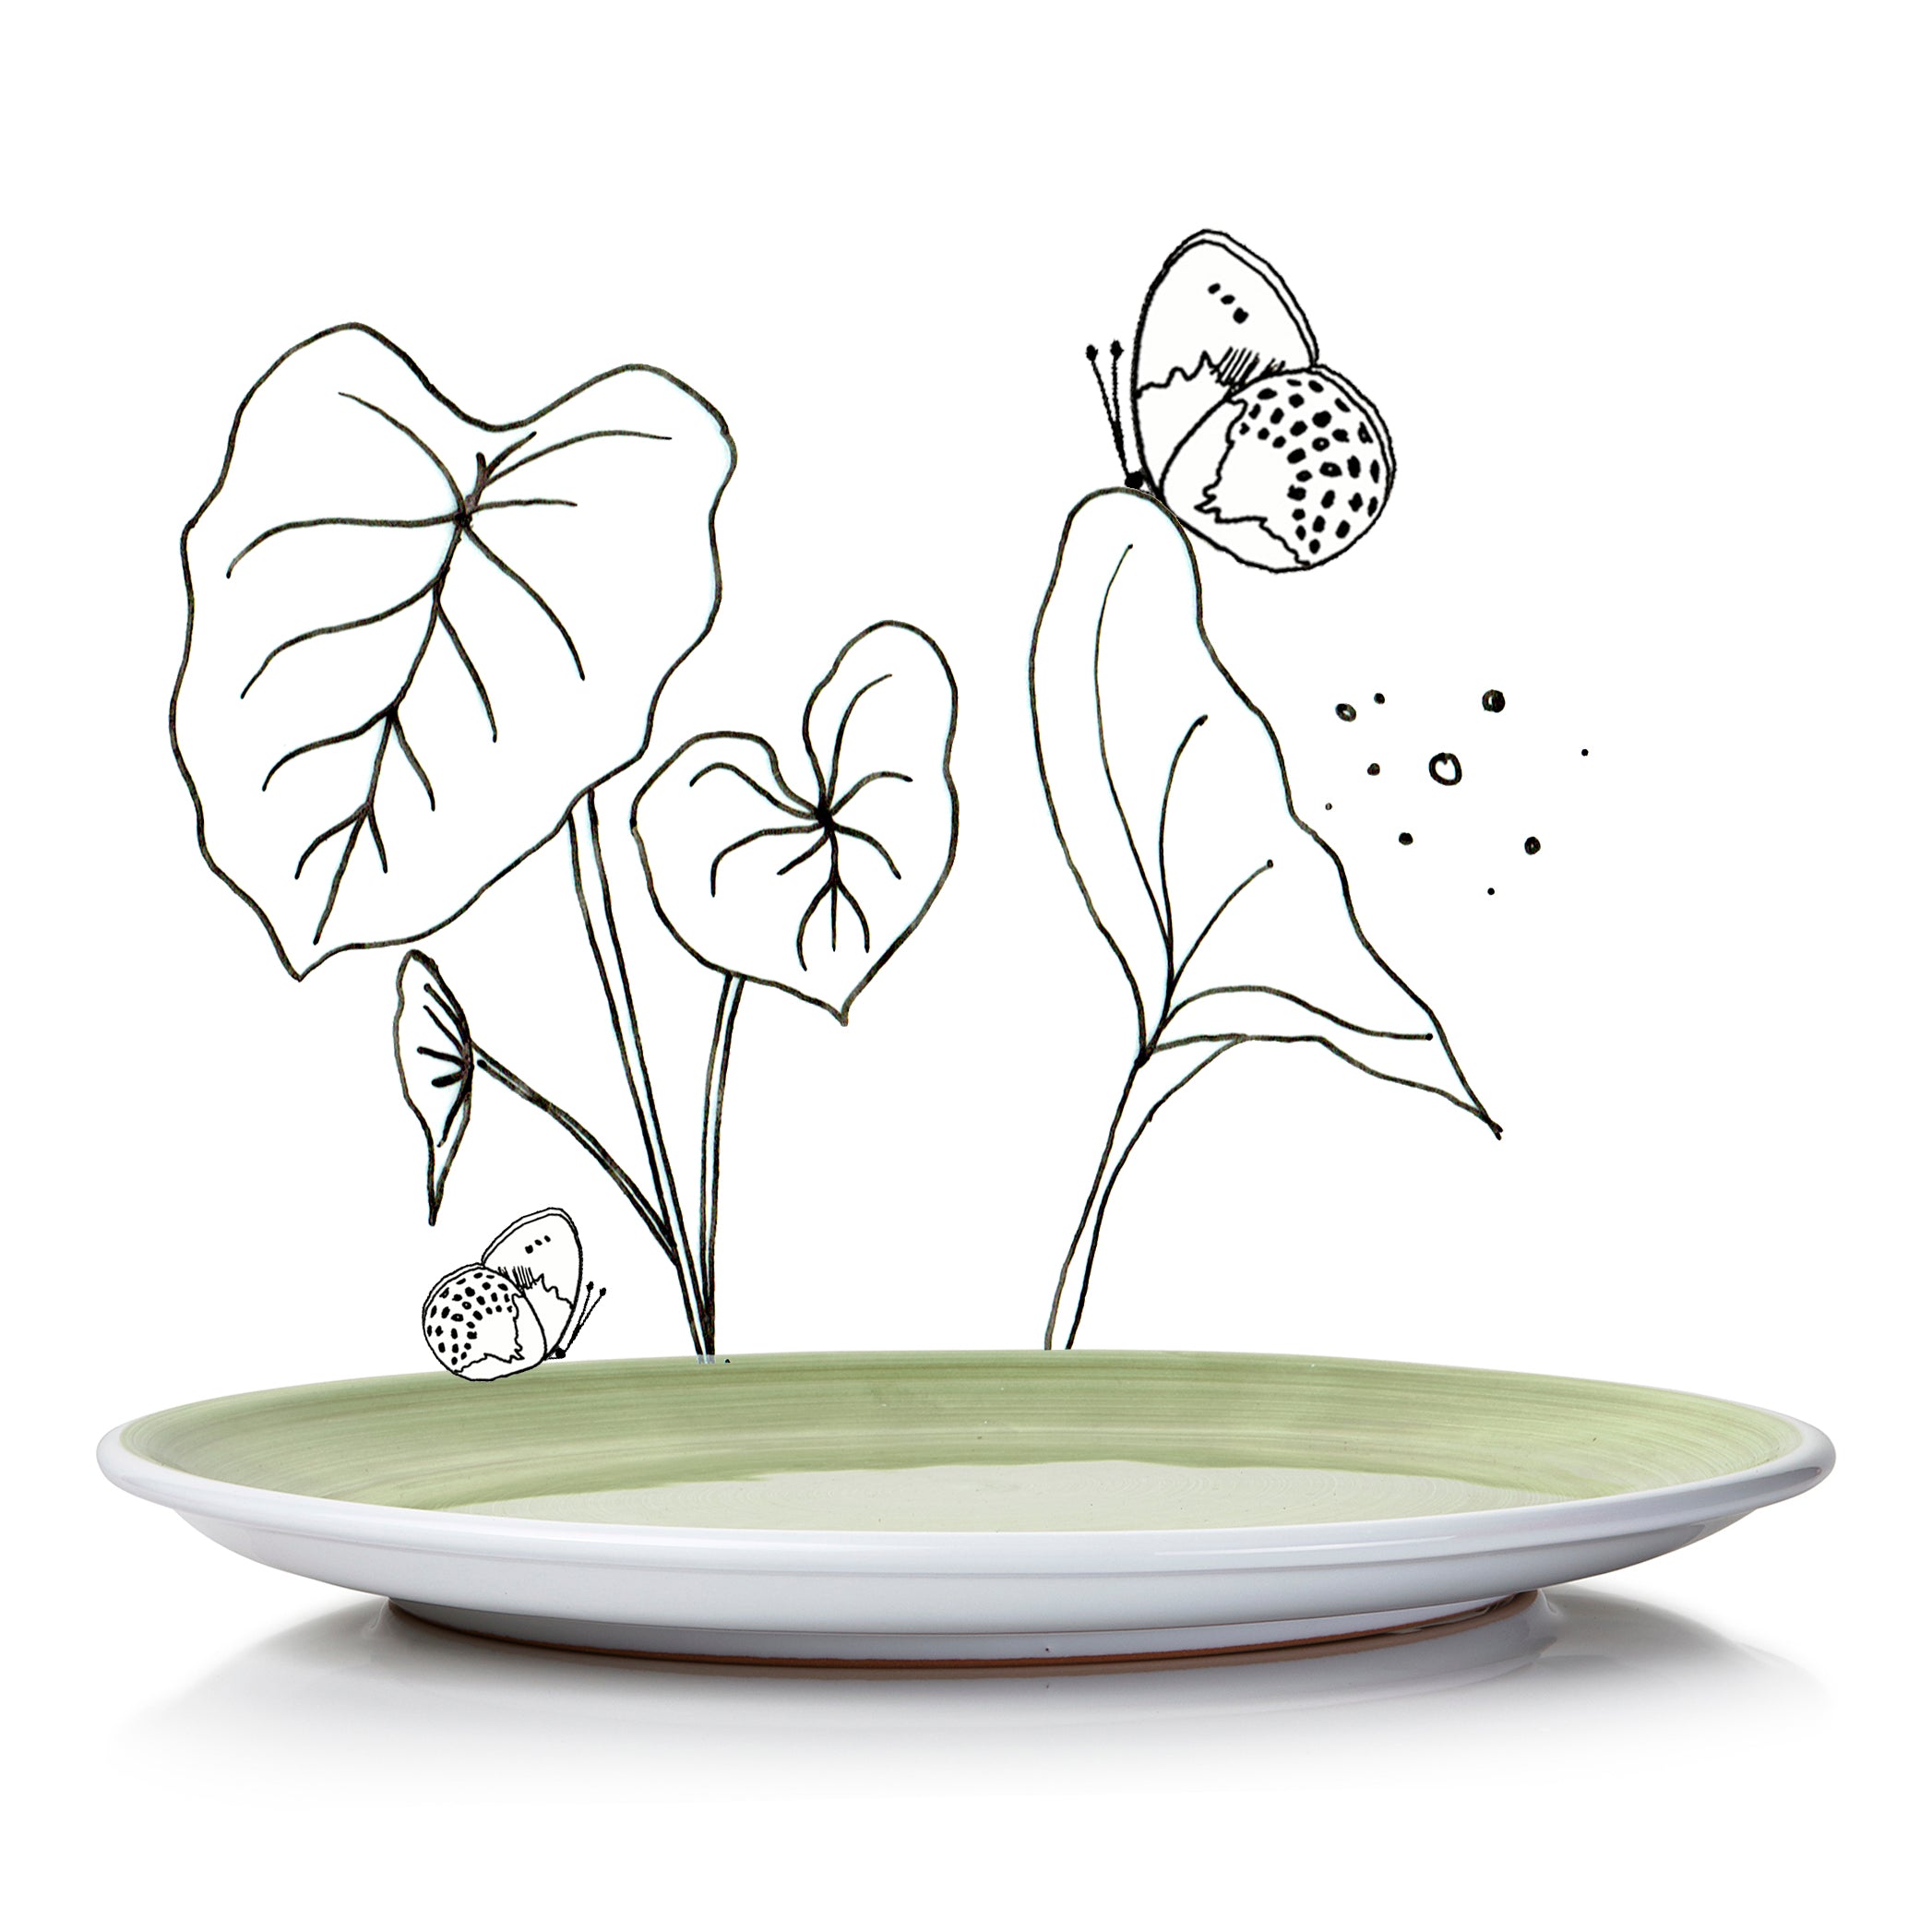 S&B 'Brushed' Ceramic Dinner Plate in Season Green, 28cm